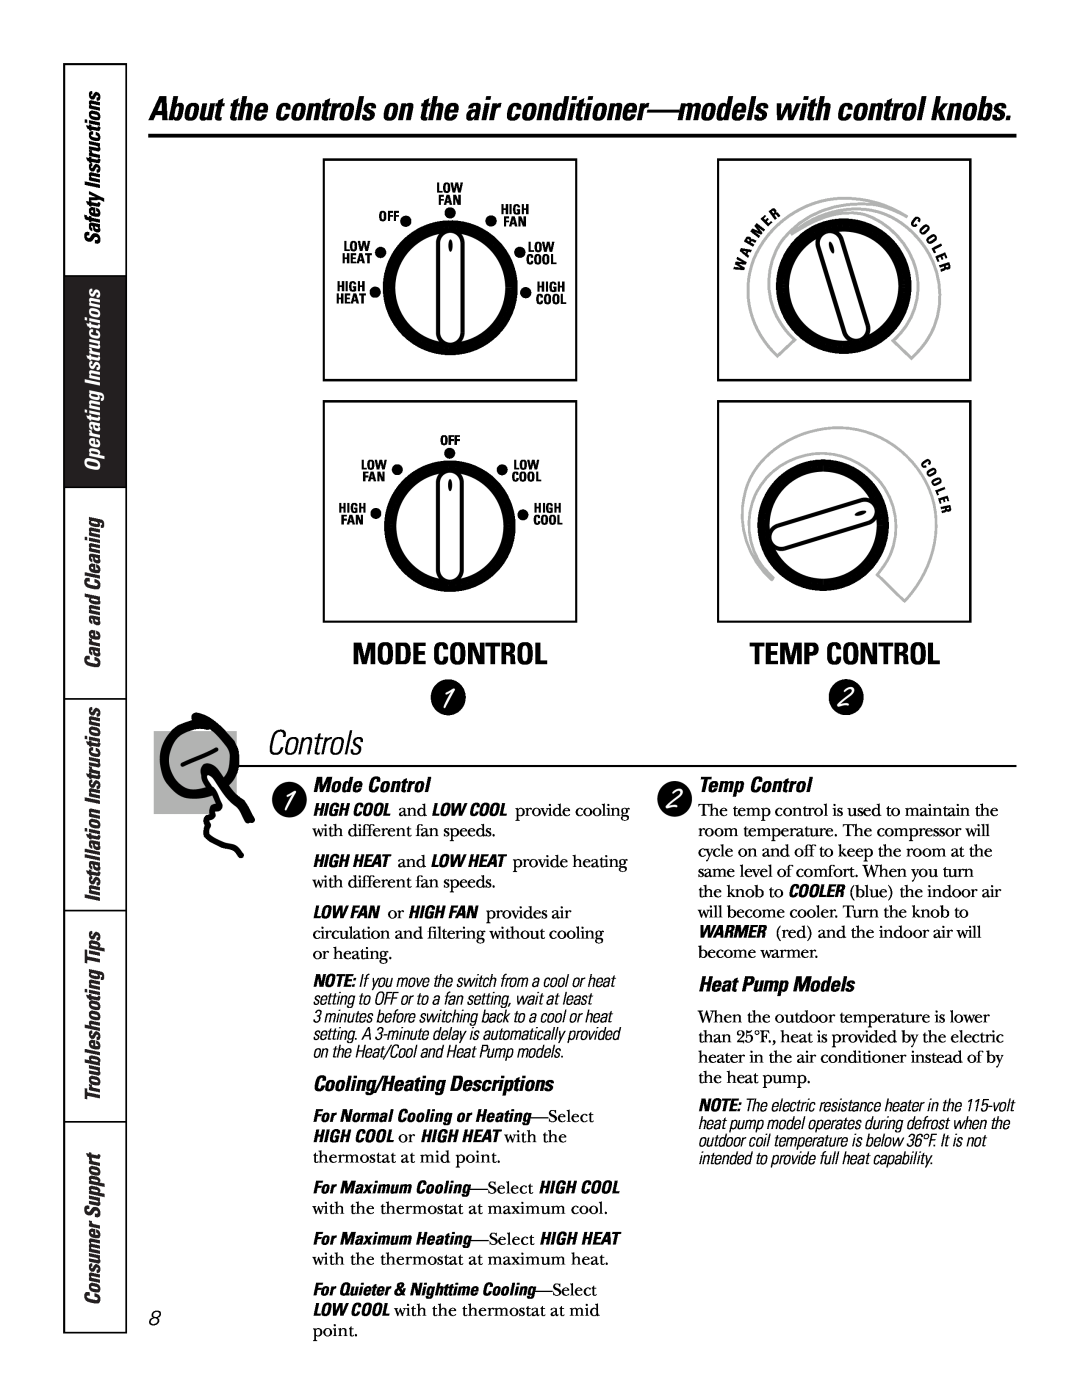 GE Cool Only Mode Control, Temp Control, Controls, Cooling/Heating Descriptions, Heat Pump Models, E R C O, High 